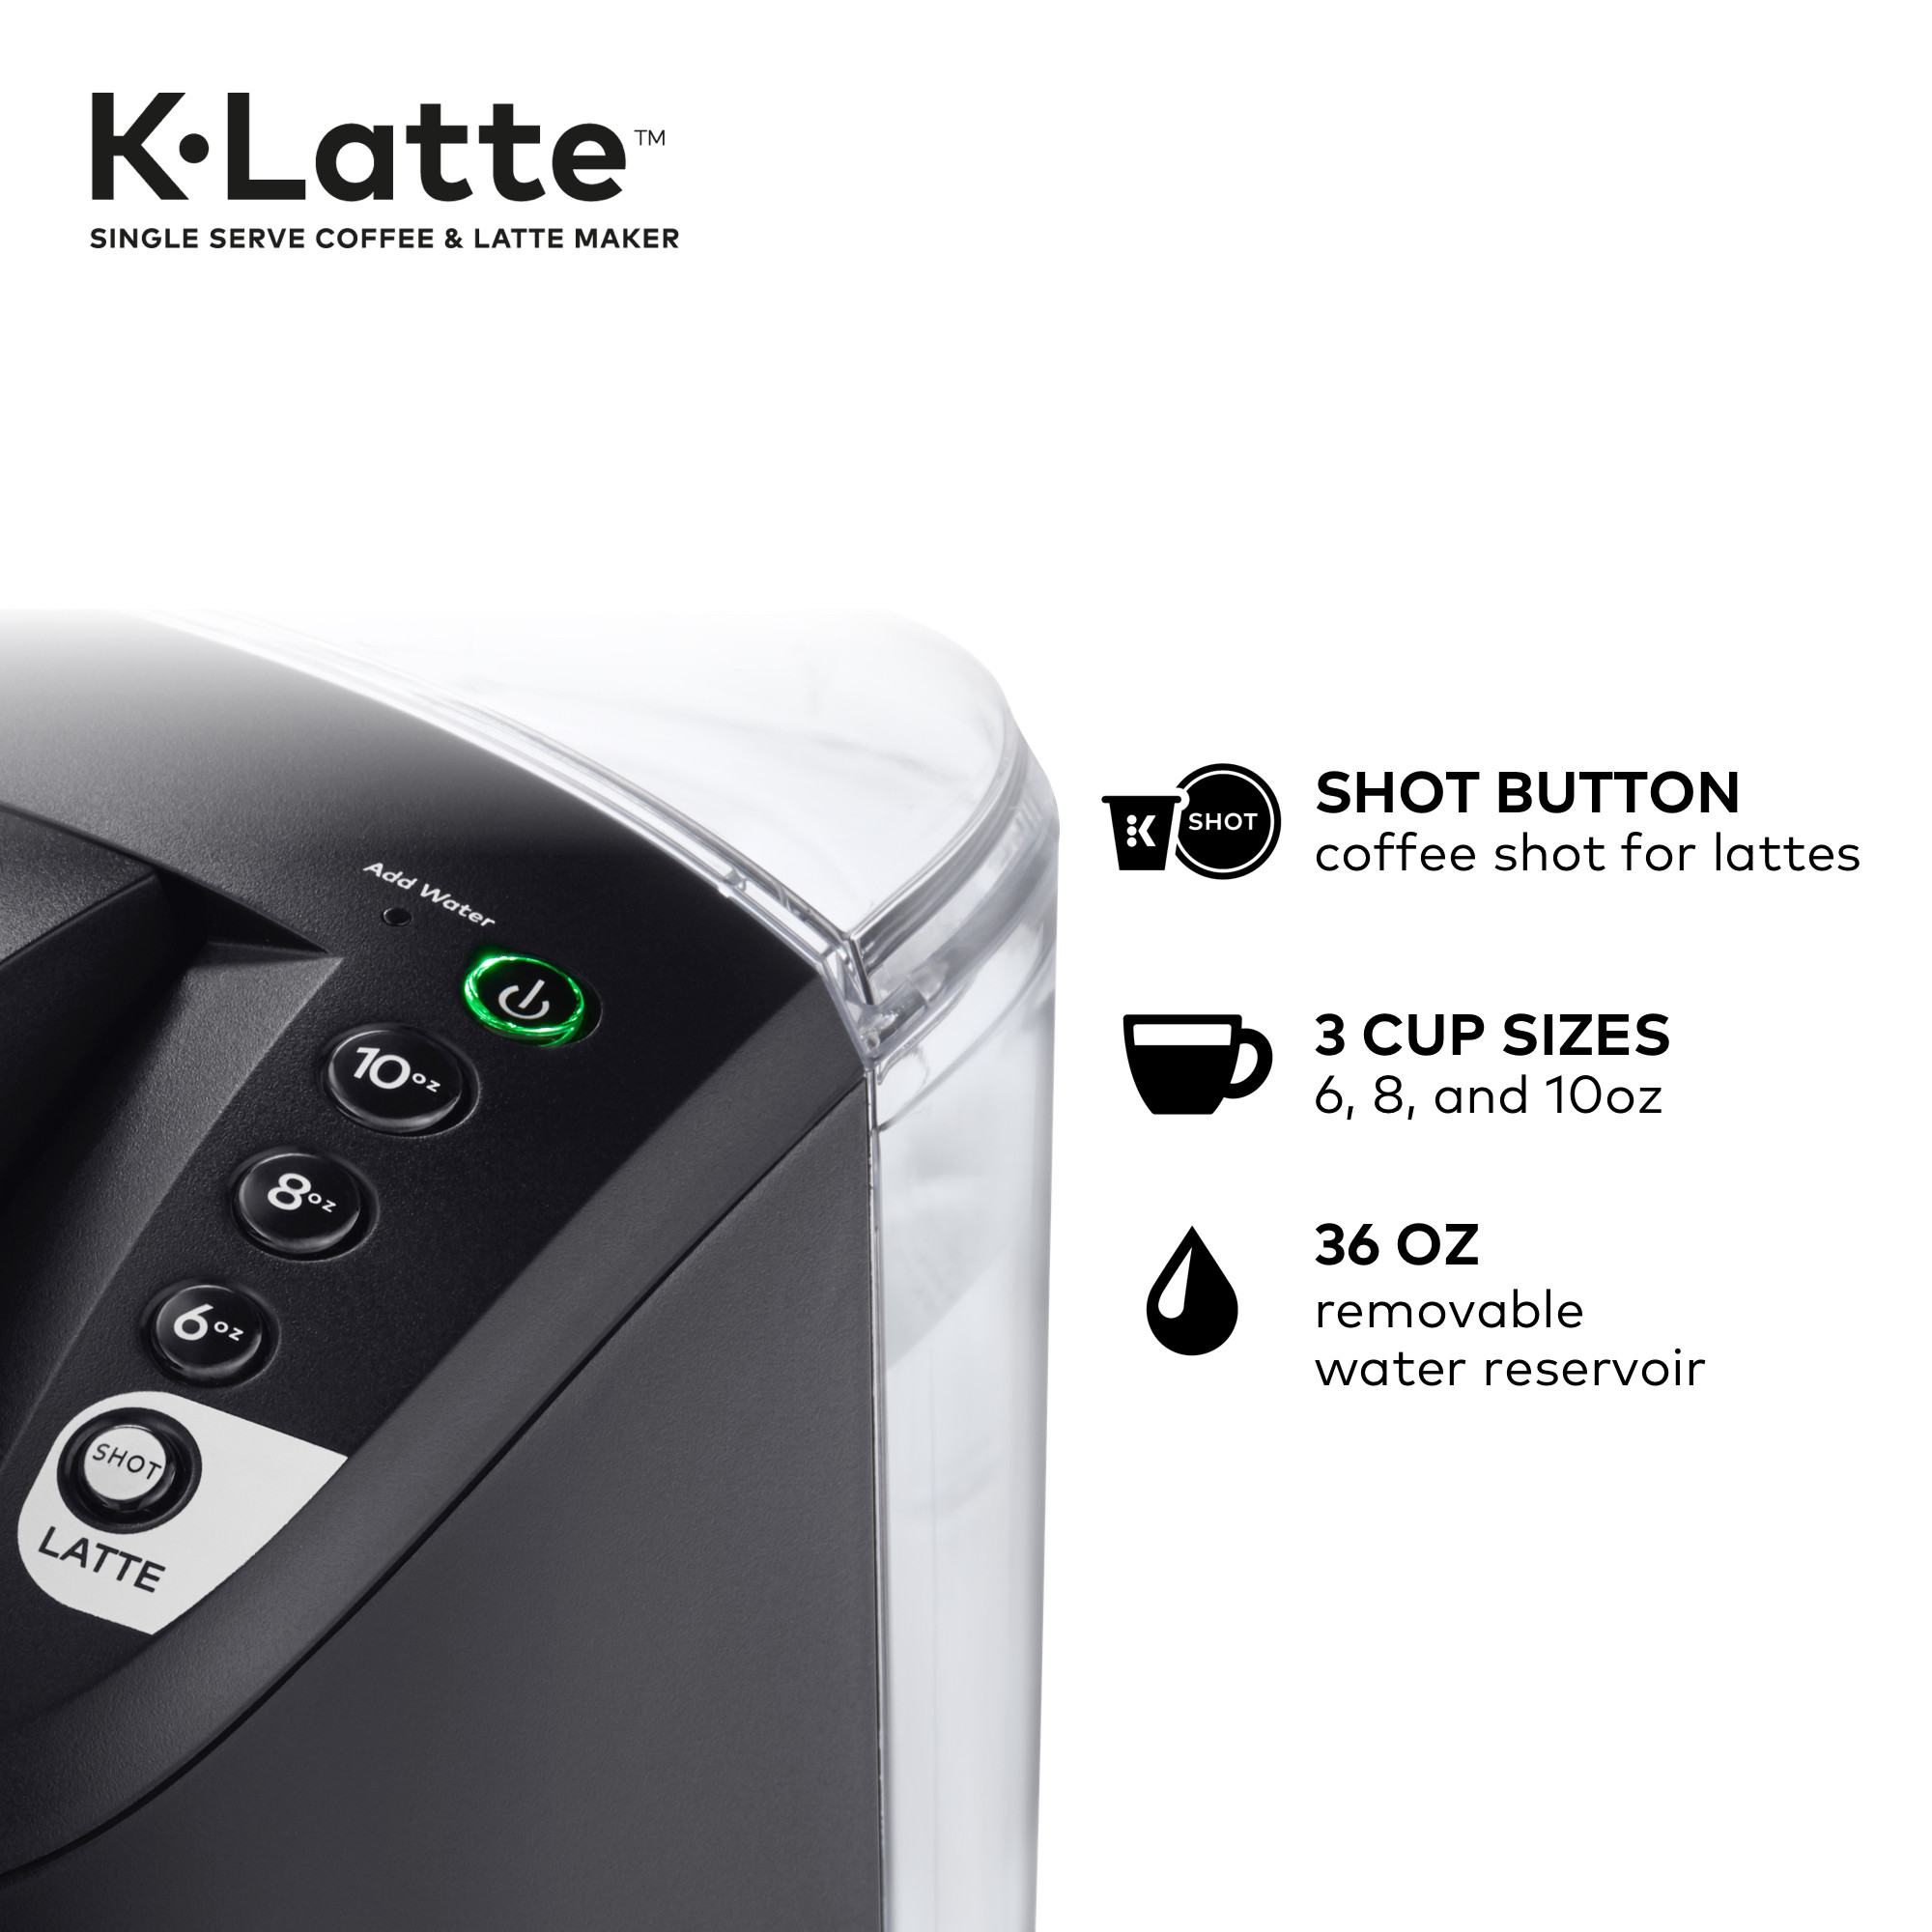 Keurig K-Latte Single Serve K-Cup Coffee and Latte Maker, Black - image 8 of 12